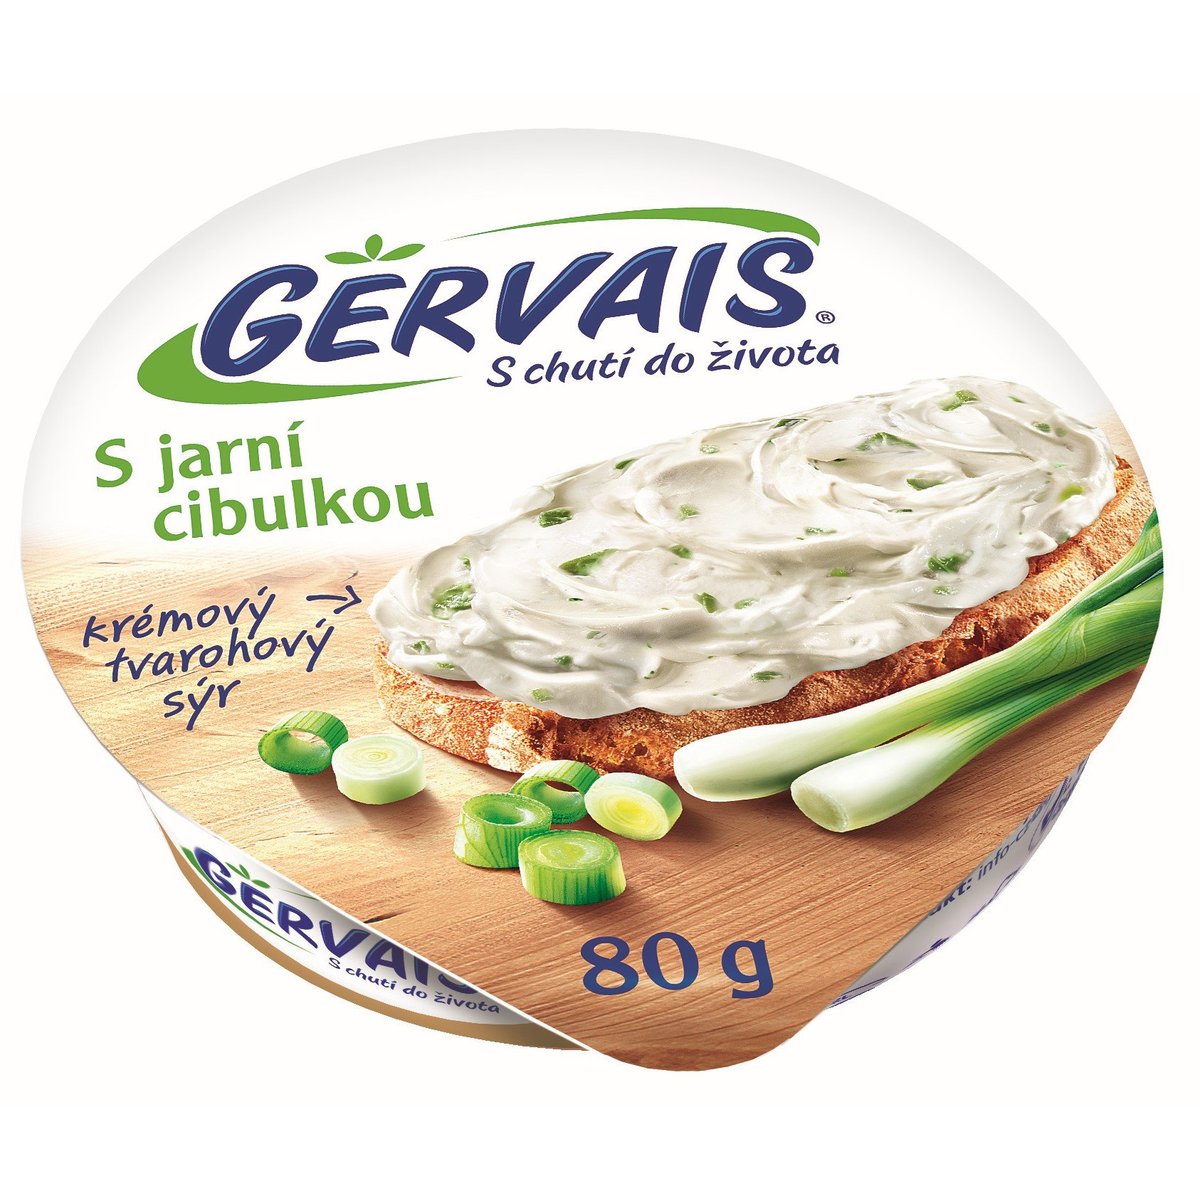 Gervais Original s jarní cibulkou